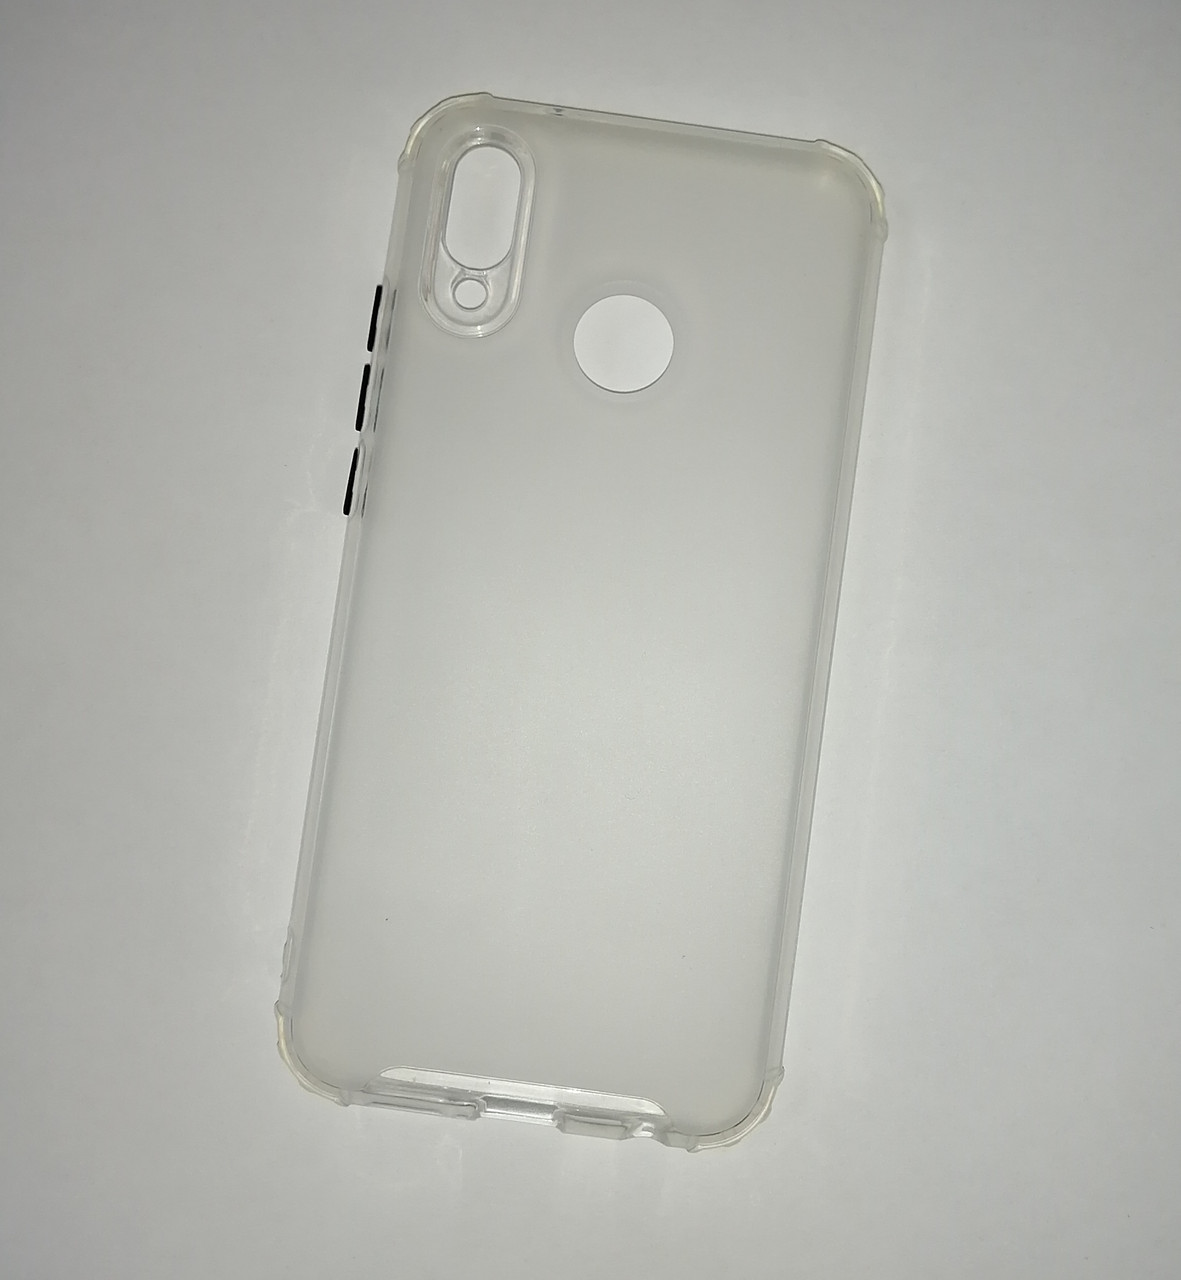 Чехол-накладка JET для Huawei P20 Lite ANE-LX1 (силикон) белый усиленный